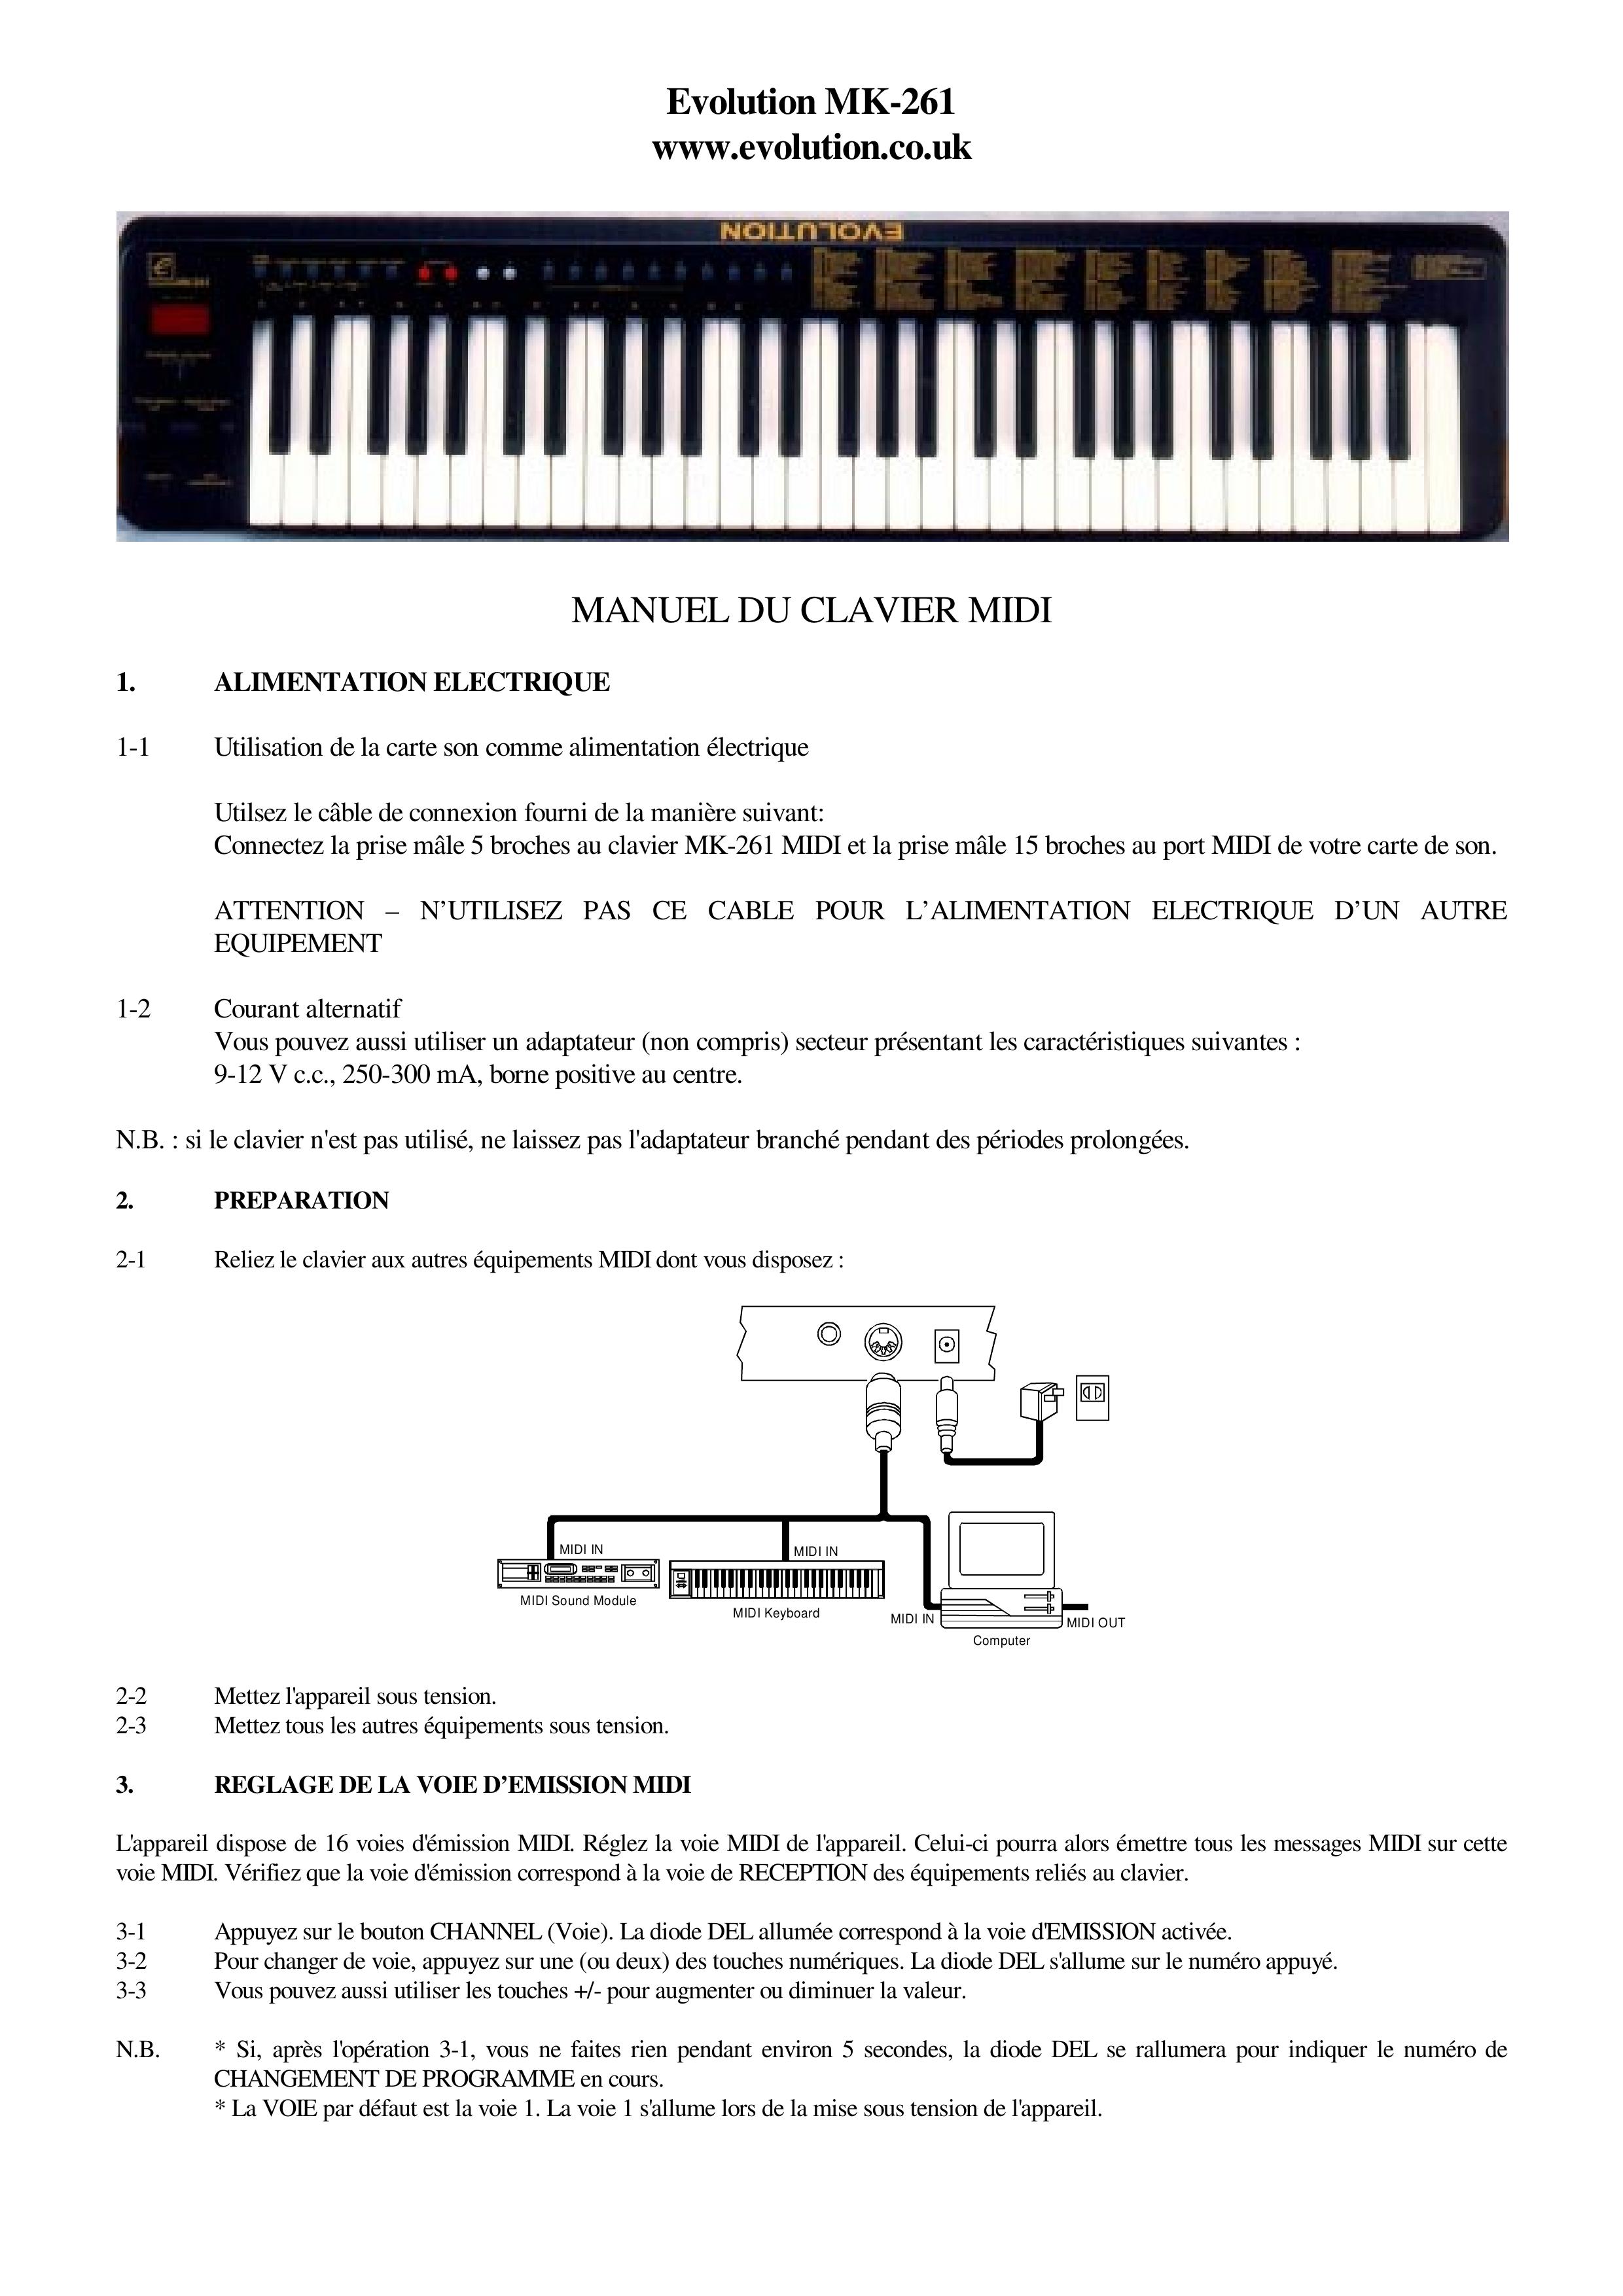 Evolution Technologies ME 105 Electronic Keyboard User Manual